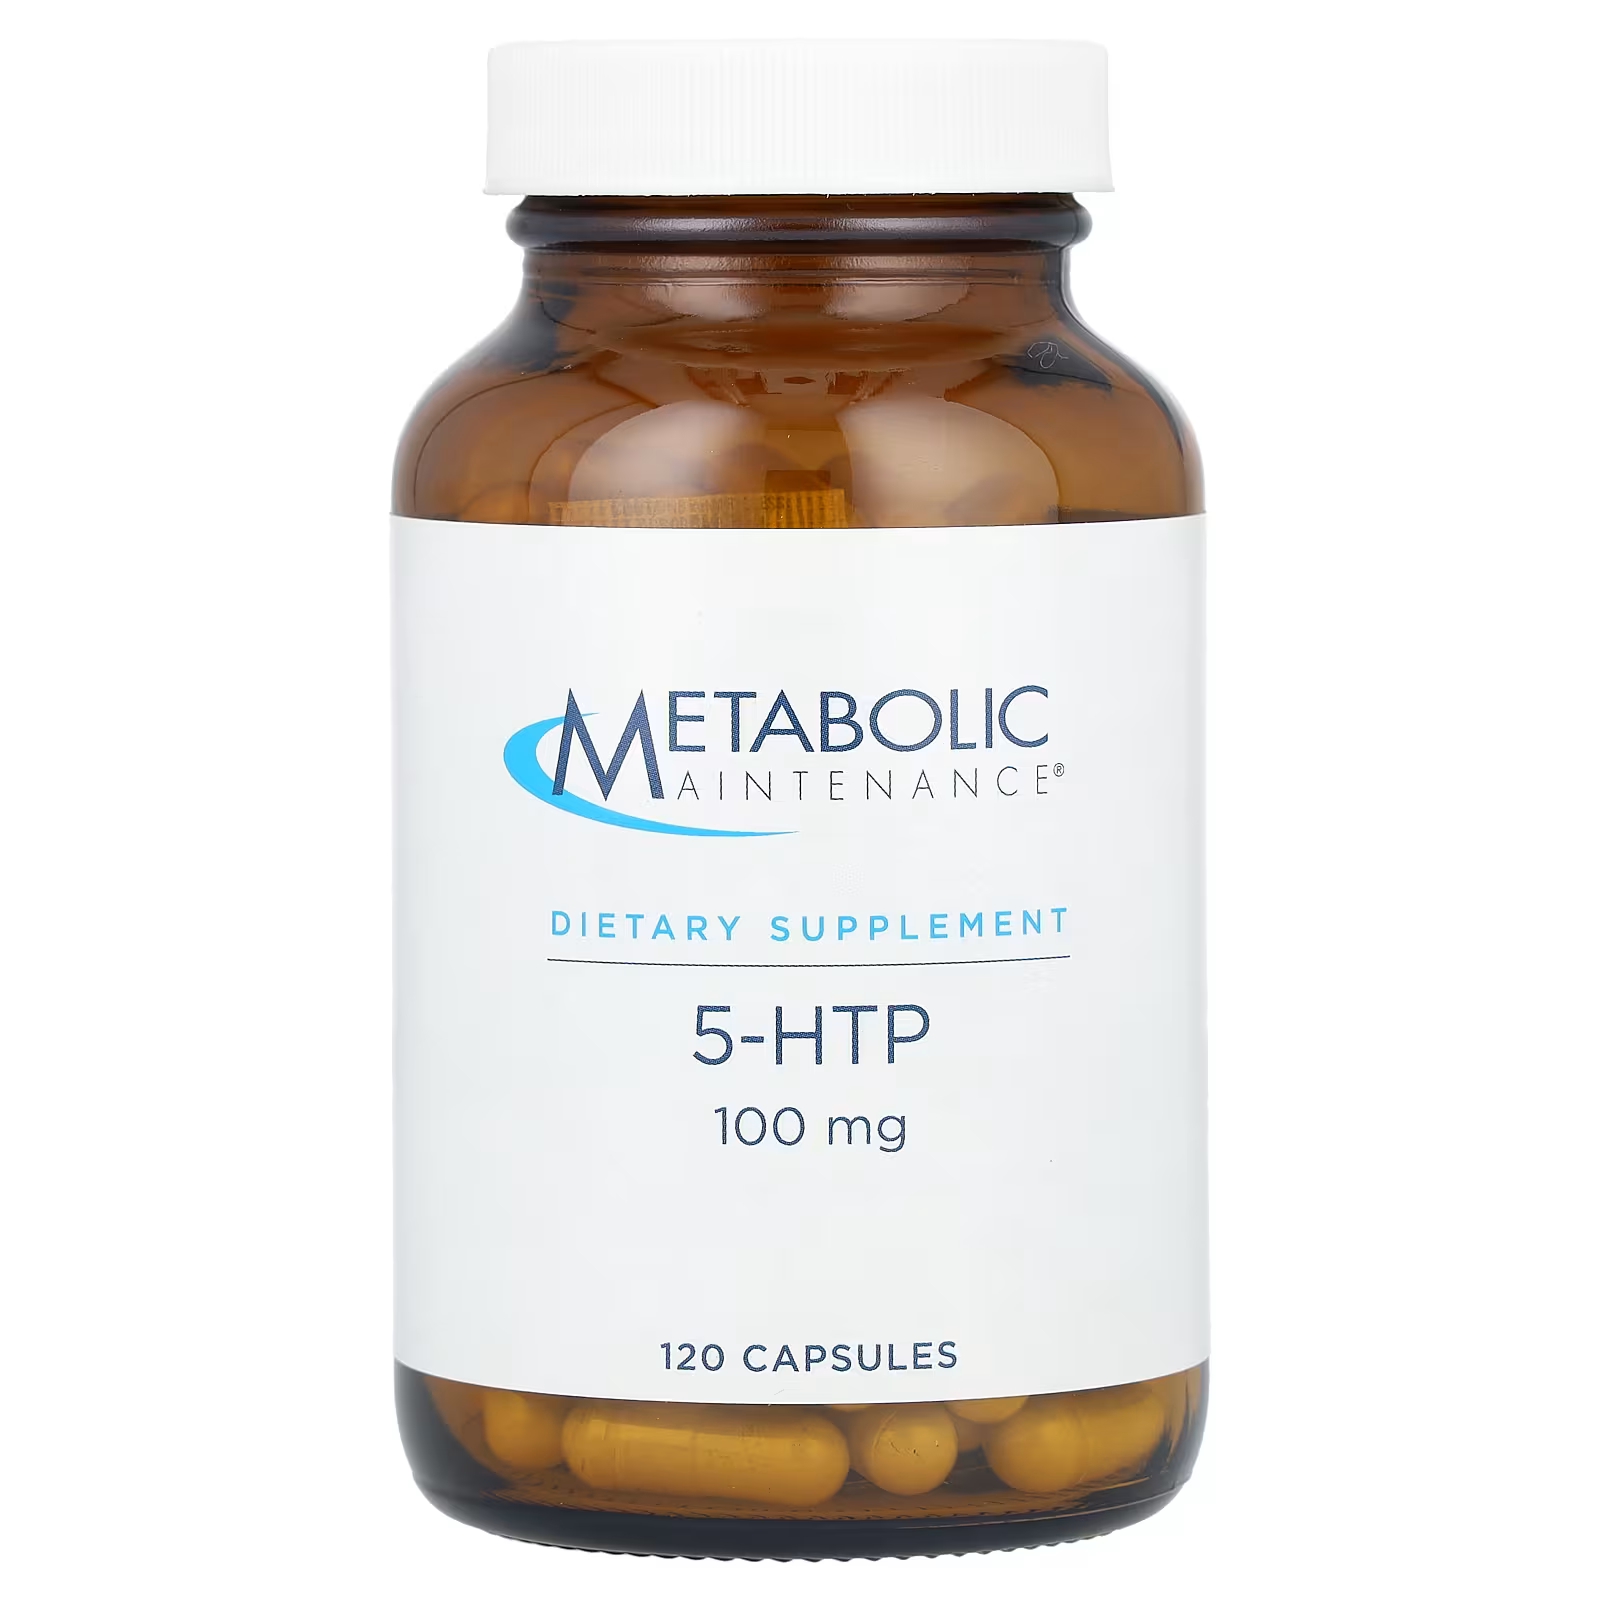 Пищевая добавка Metabolic Maintenance 5-HTP 100 мг, 120 капсул пищевая добавка nutricost 5 htp 100 мг 240 капсул